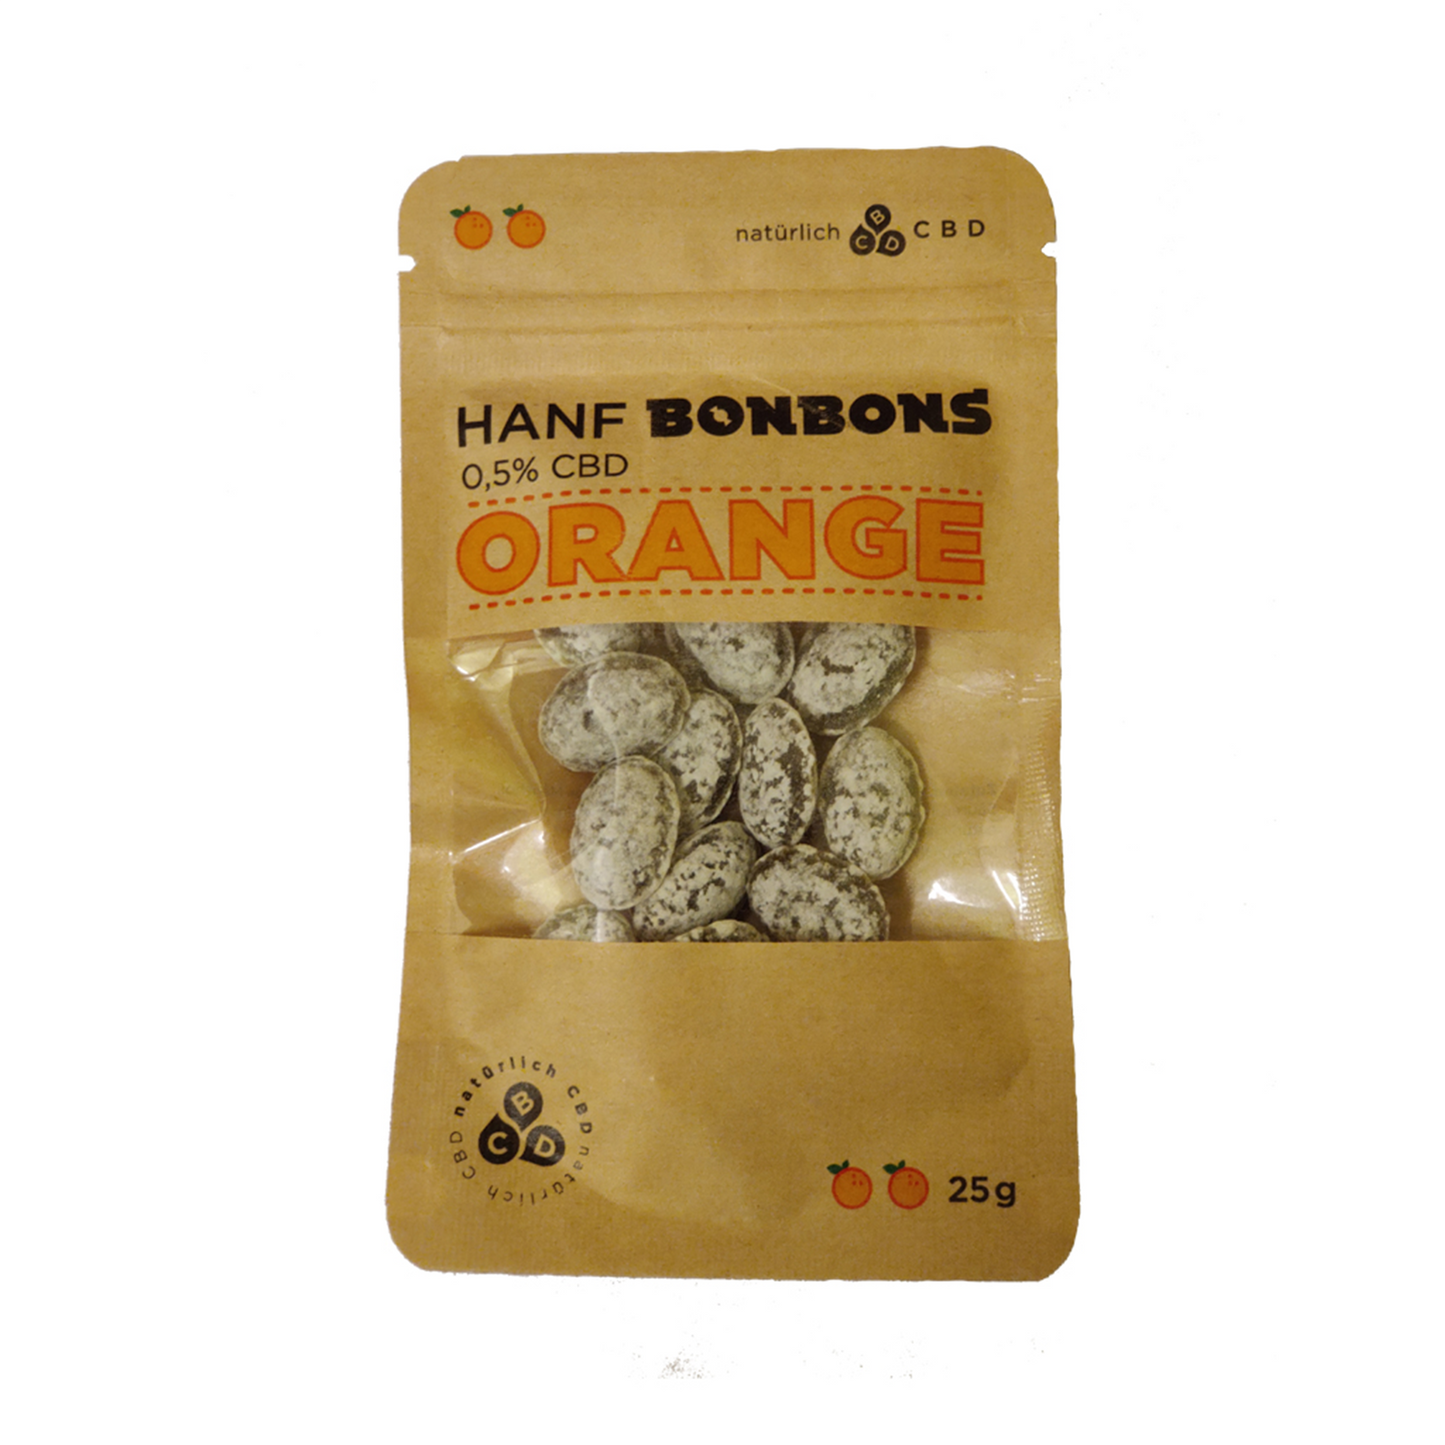 Hanf Bonbons Orange